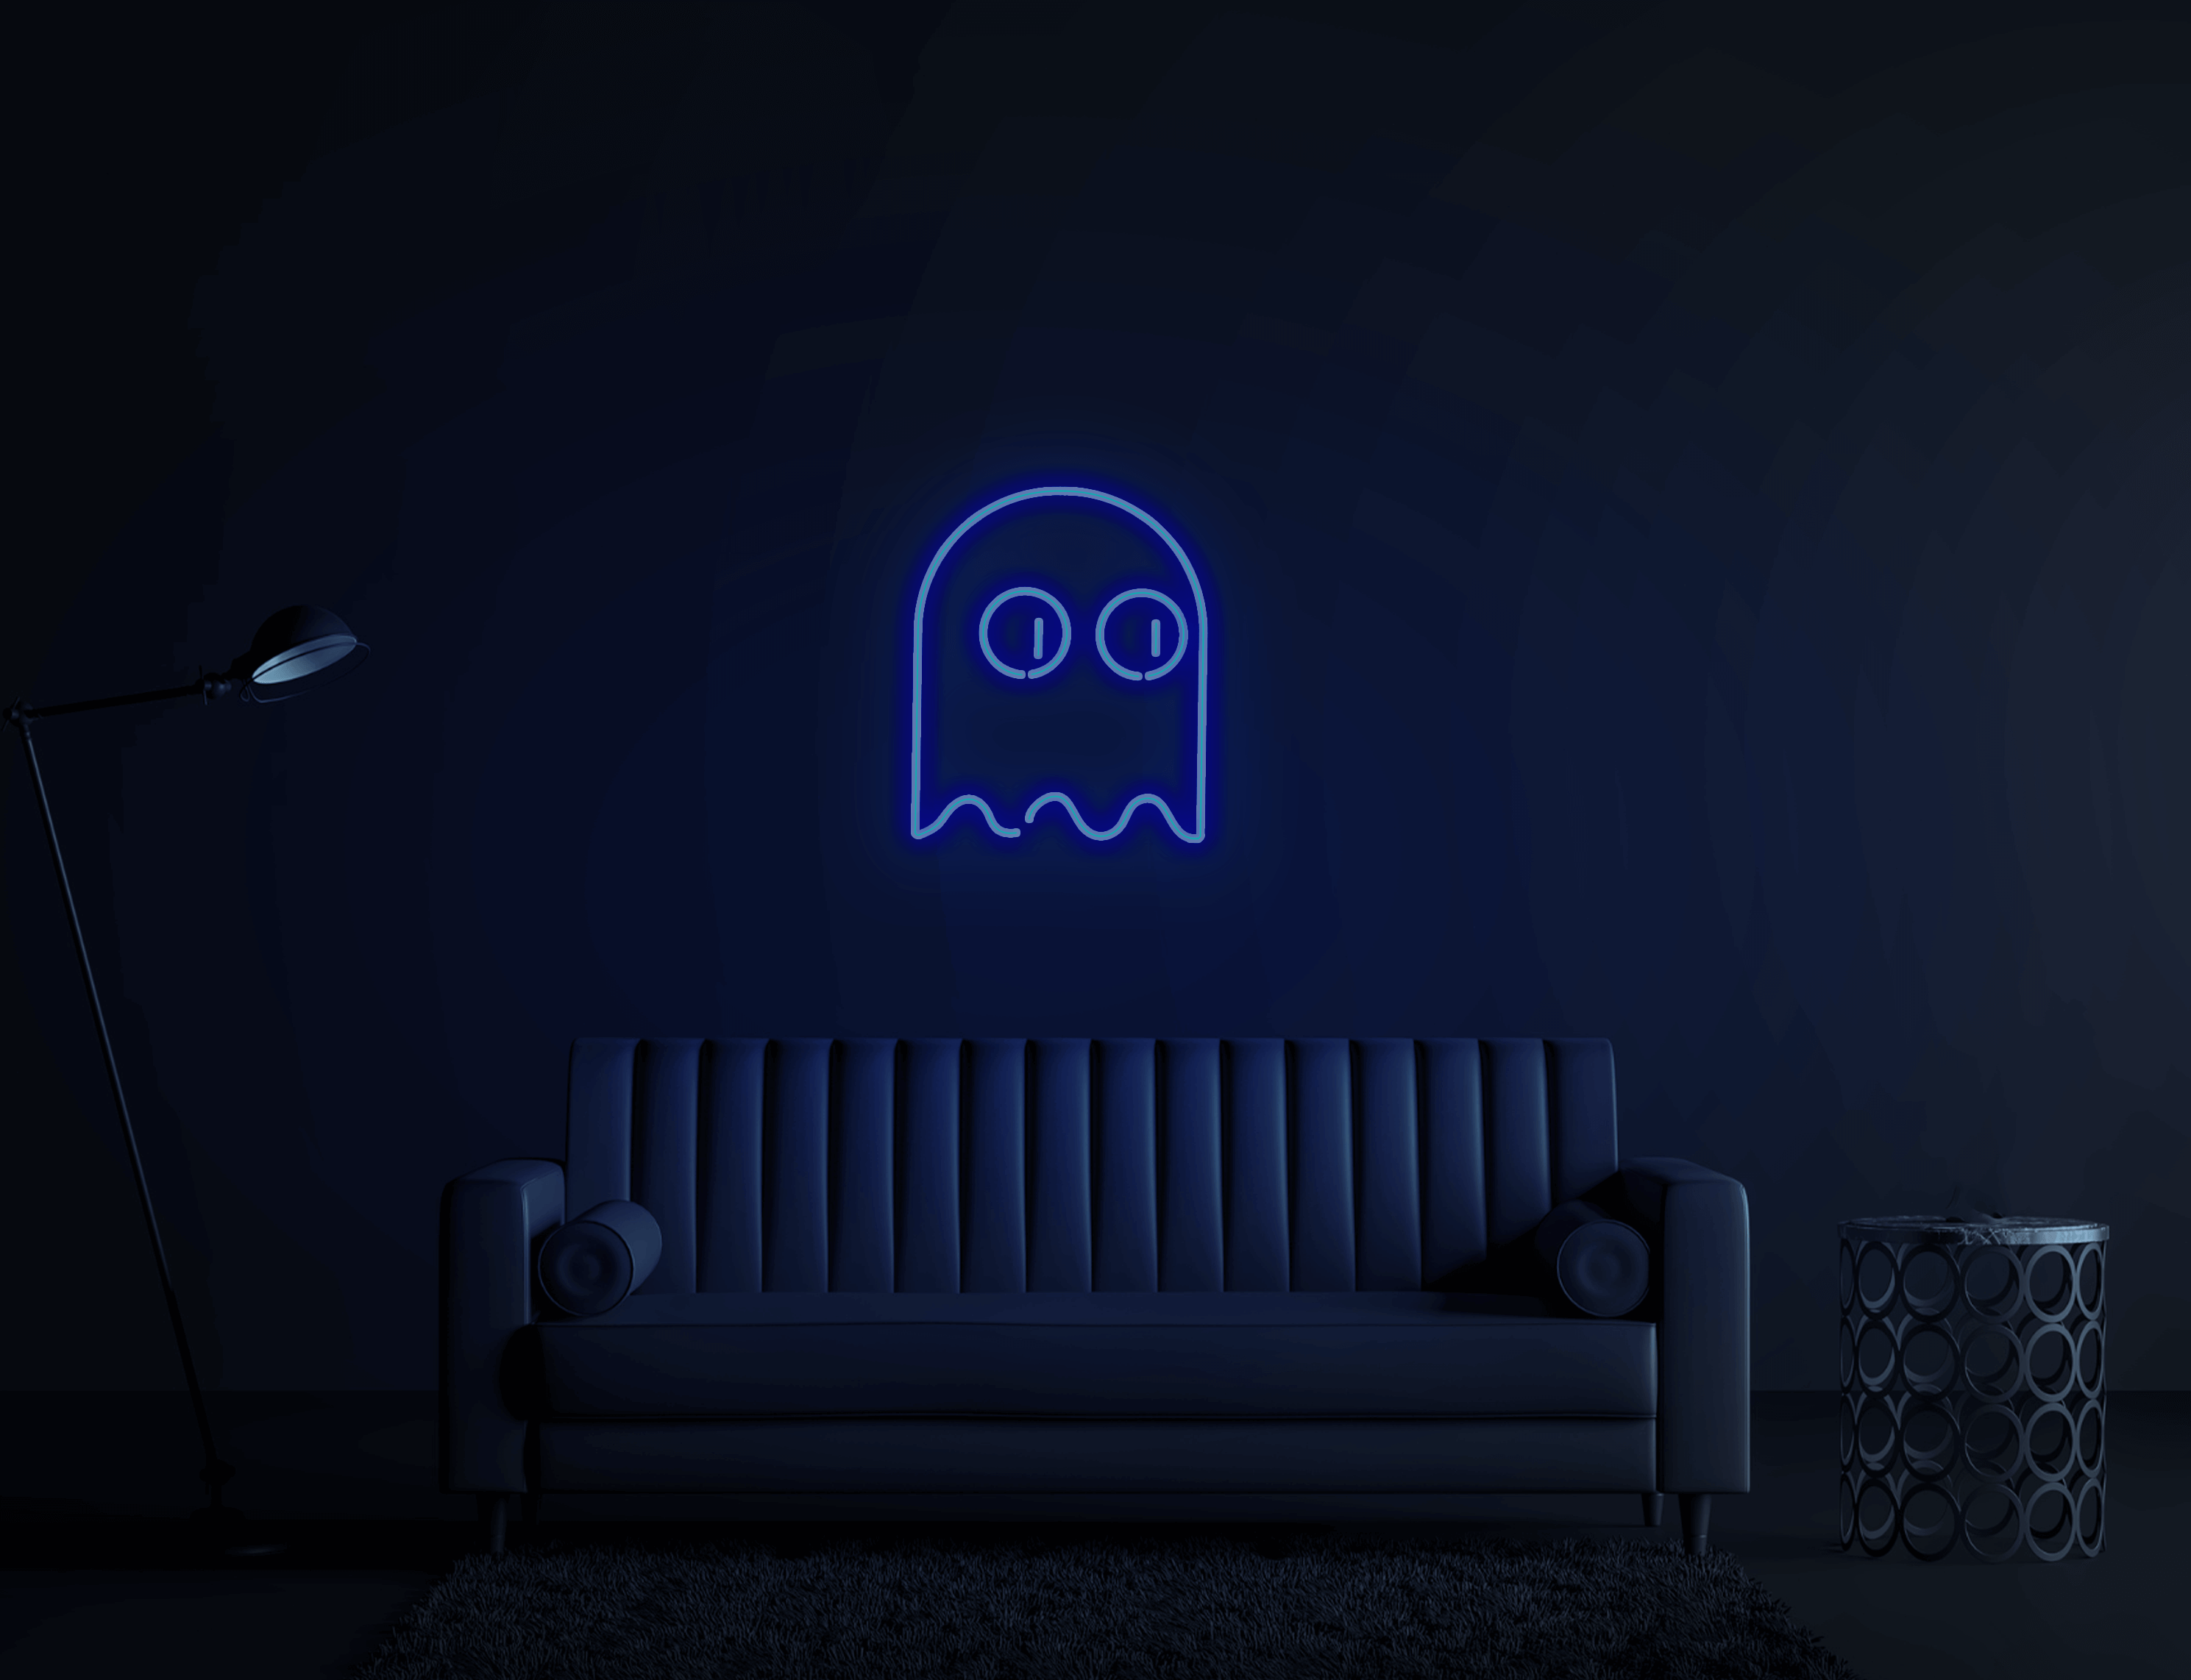 Pac-Man Ghost